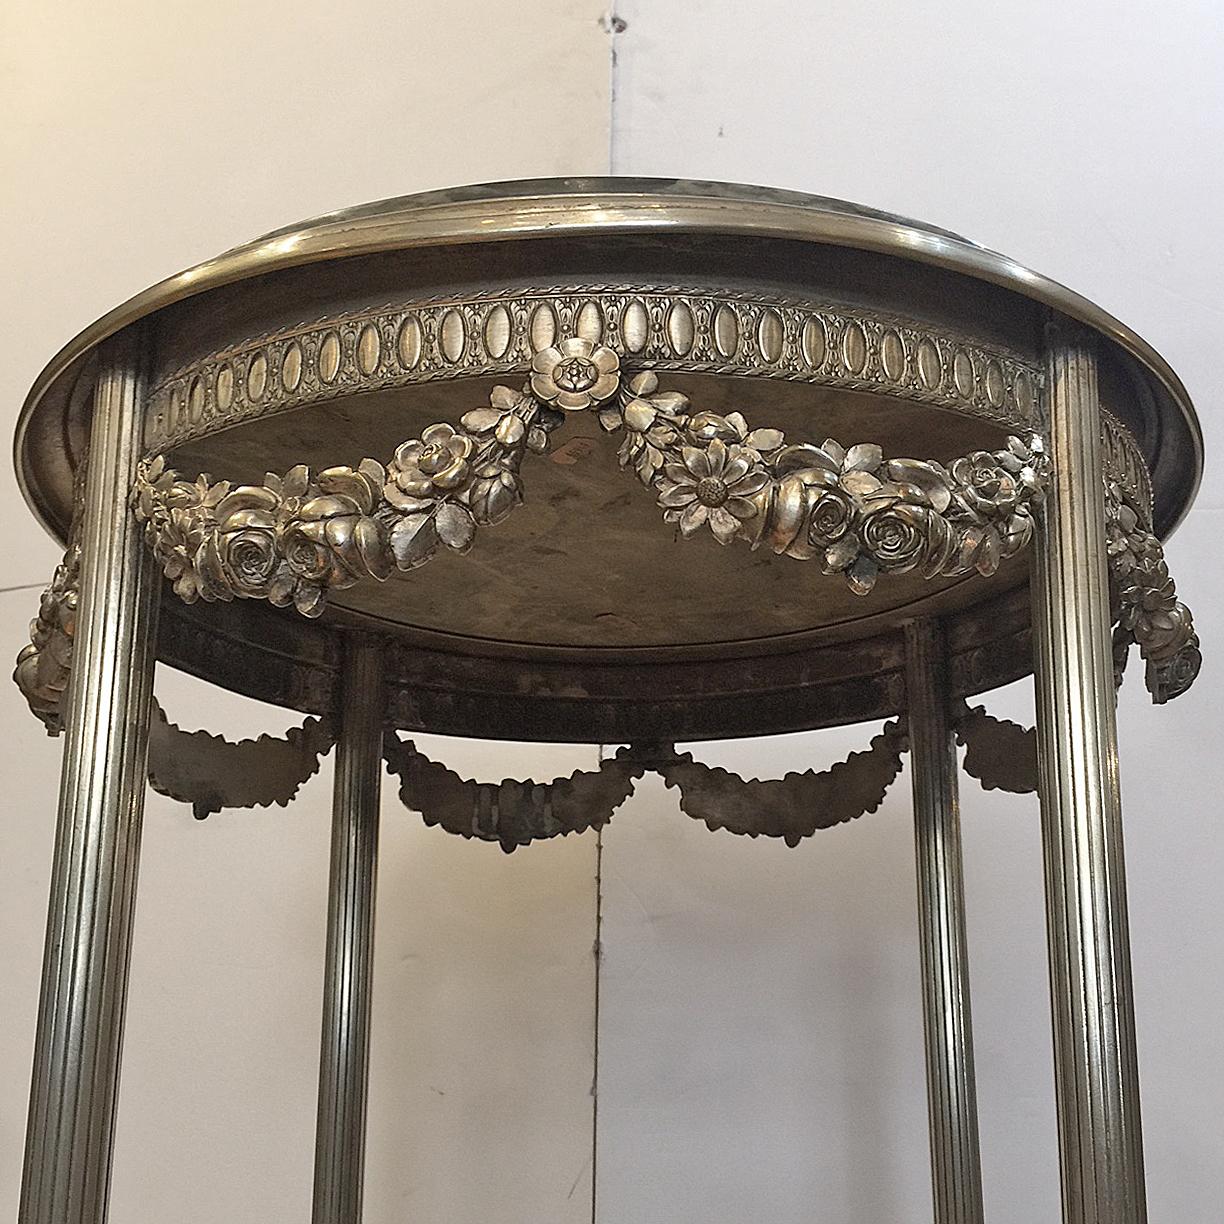 Regency Revival 19th Century Regency Tea Table Center Table in Bronze Silver